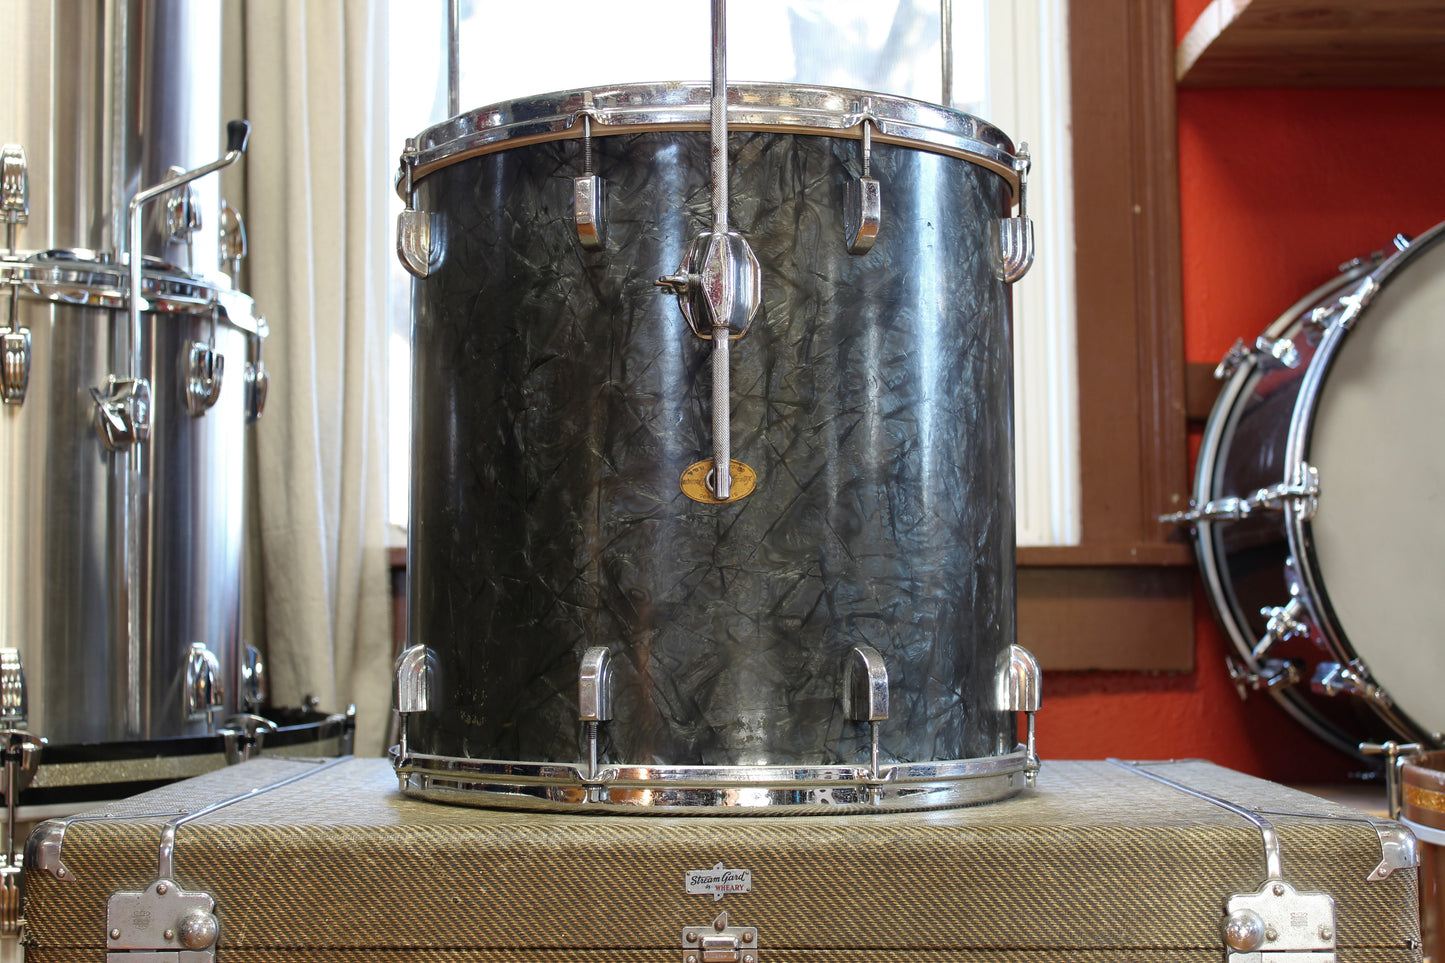 1960s Leedy Drum Kit in Black Diamond Pearl 14x20 16x16 9x13